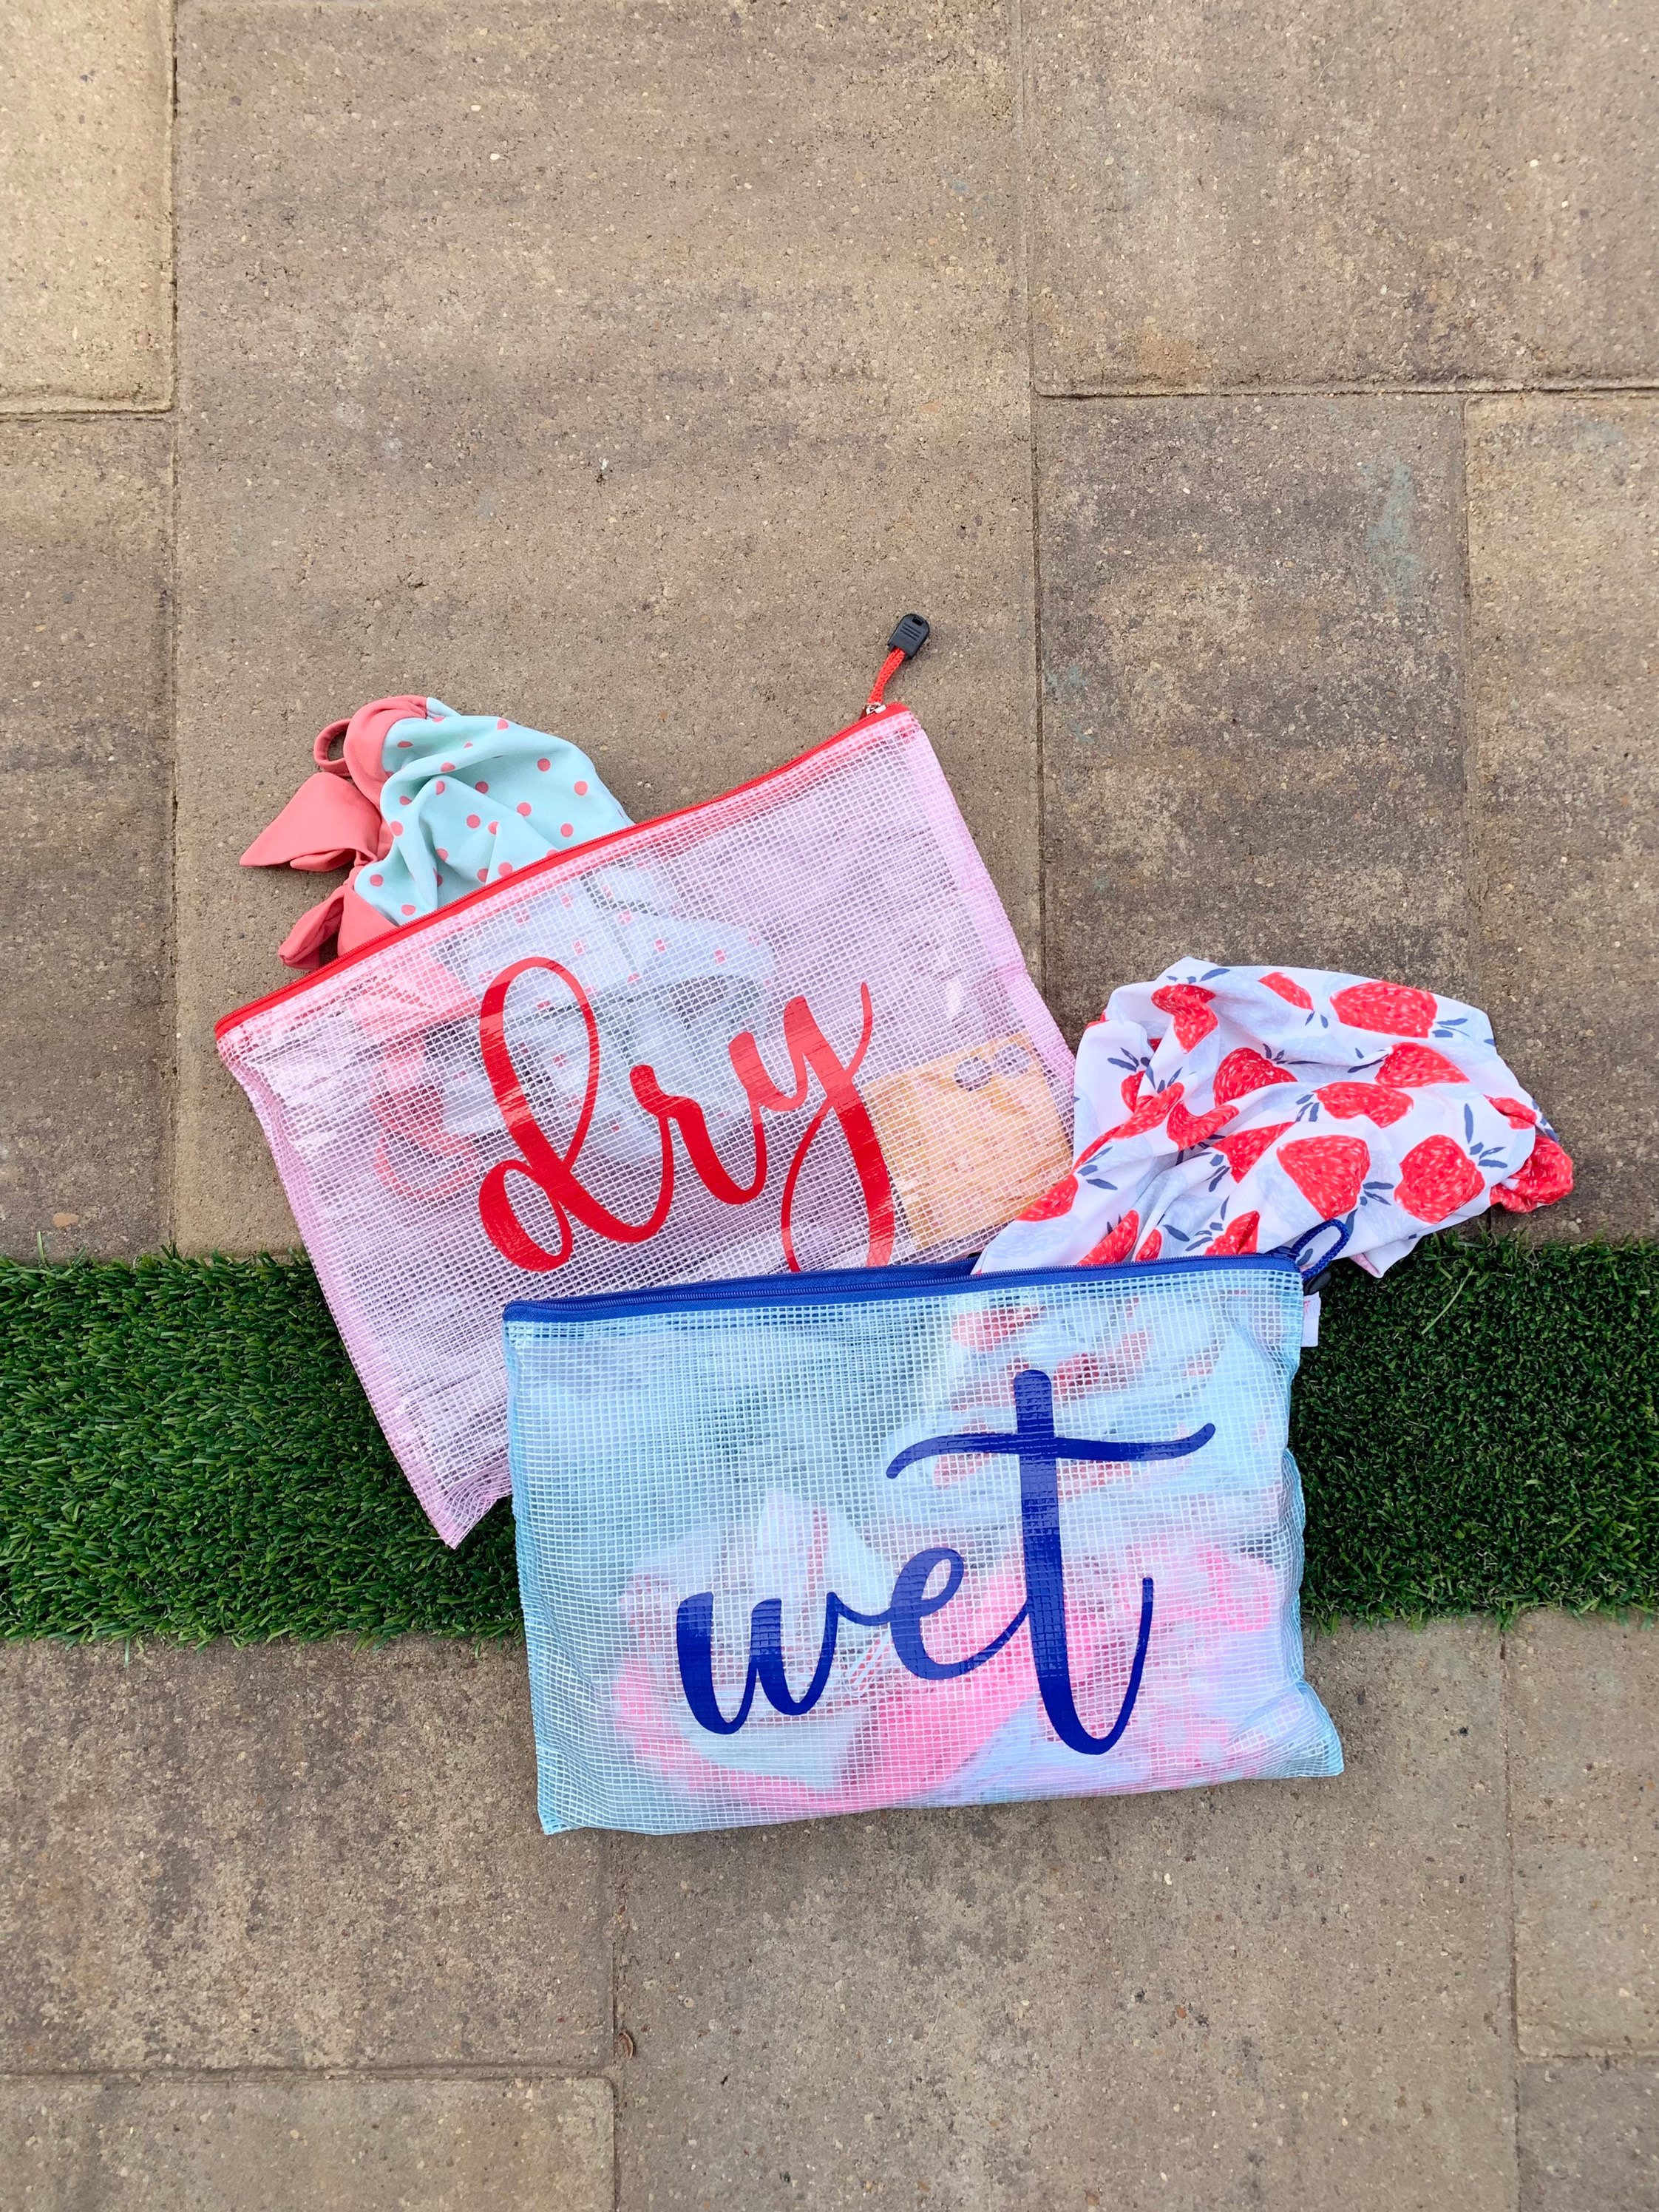 Oilcloth Bikini Bag, Swimsuit Wet Bag